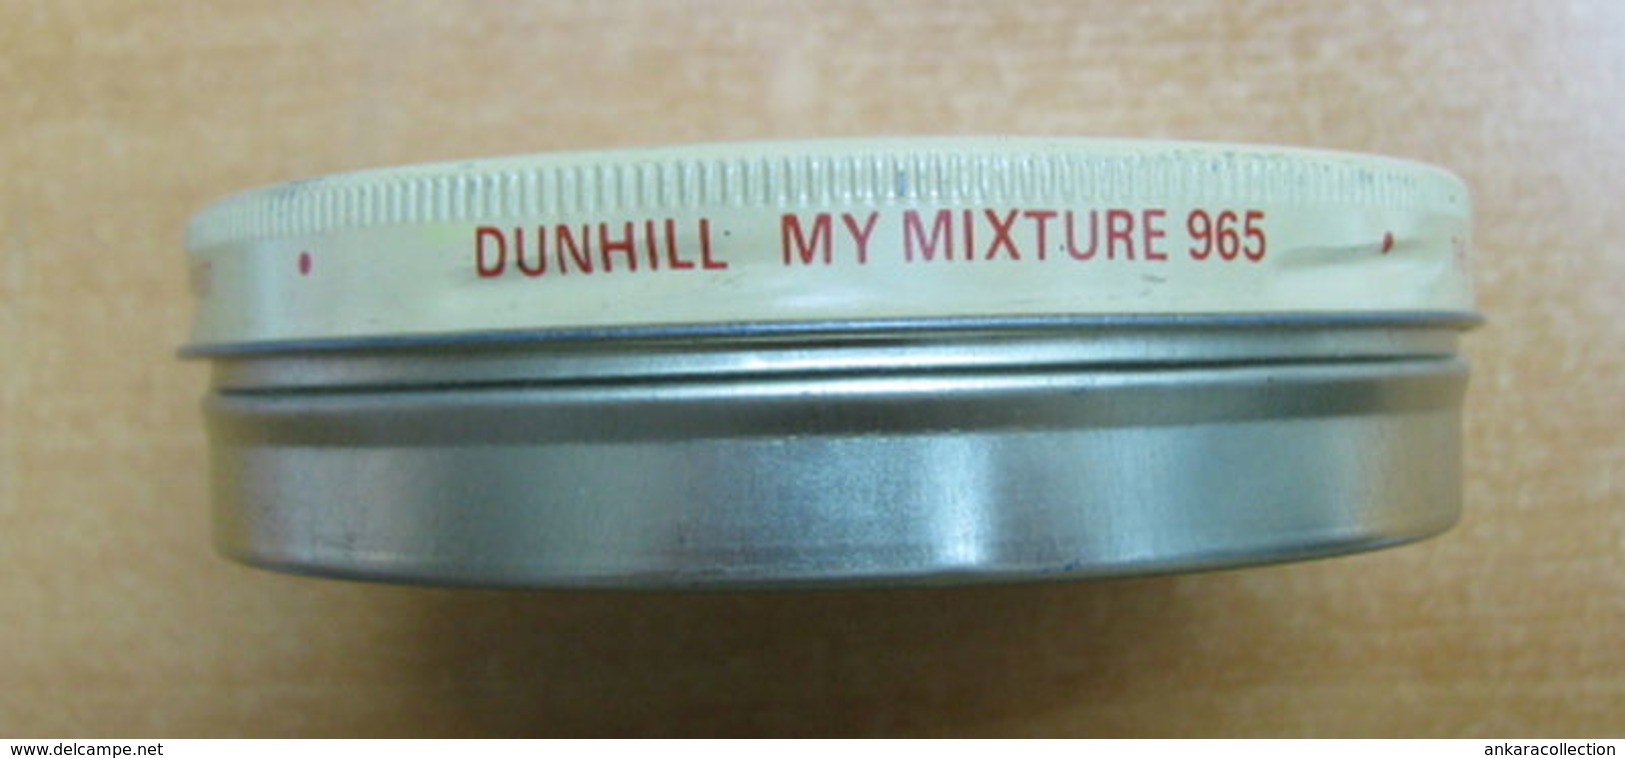 AC - DUNHILL MIXTURE 965 CIGARETE - TOBACCO EMPTY TIN BOX FINE CONDITION FOR COLLECTION - Boites à Tabac Vides